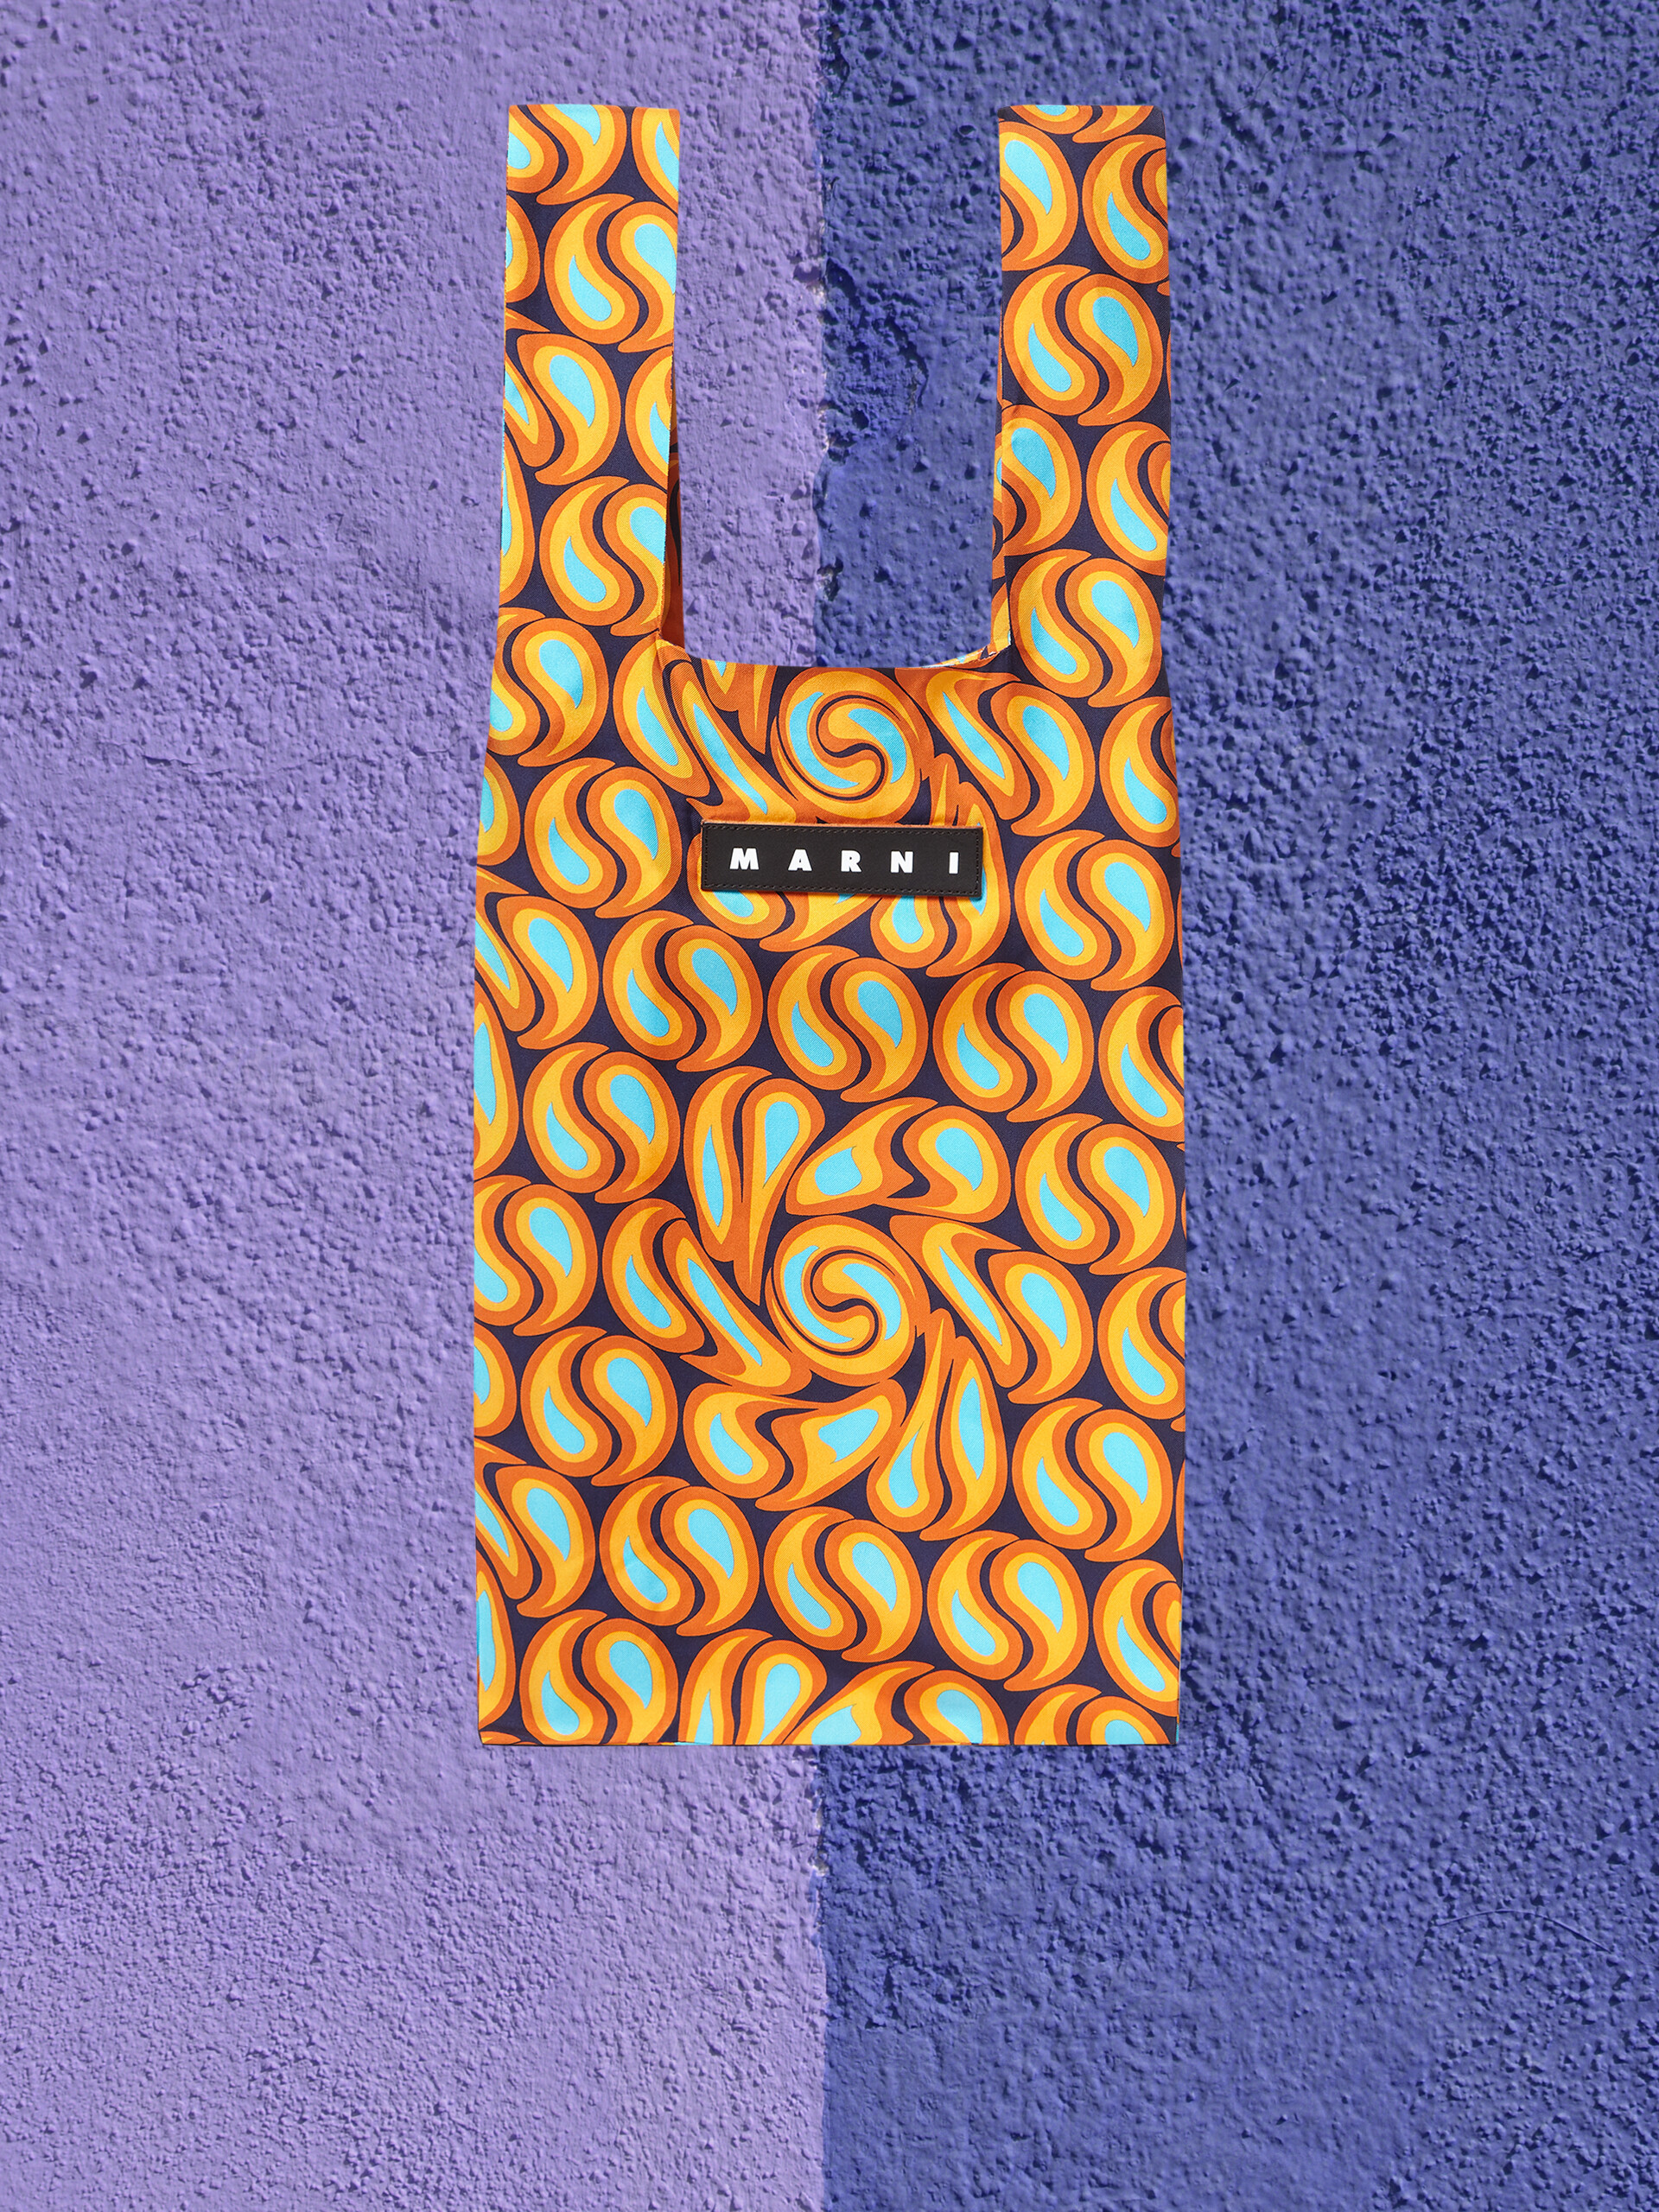 MARNI MARKET silk shopping bag with abstract print - Bags - Image 1